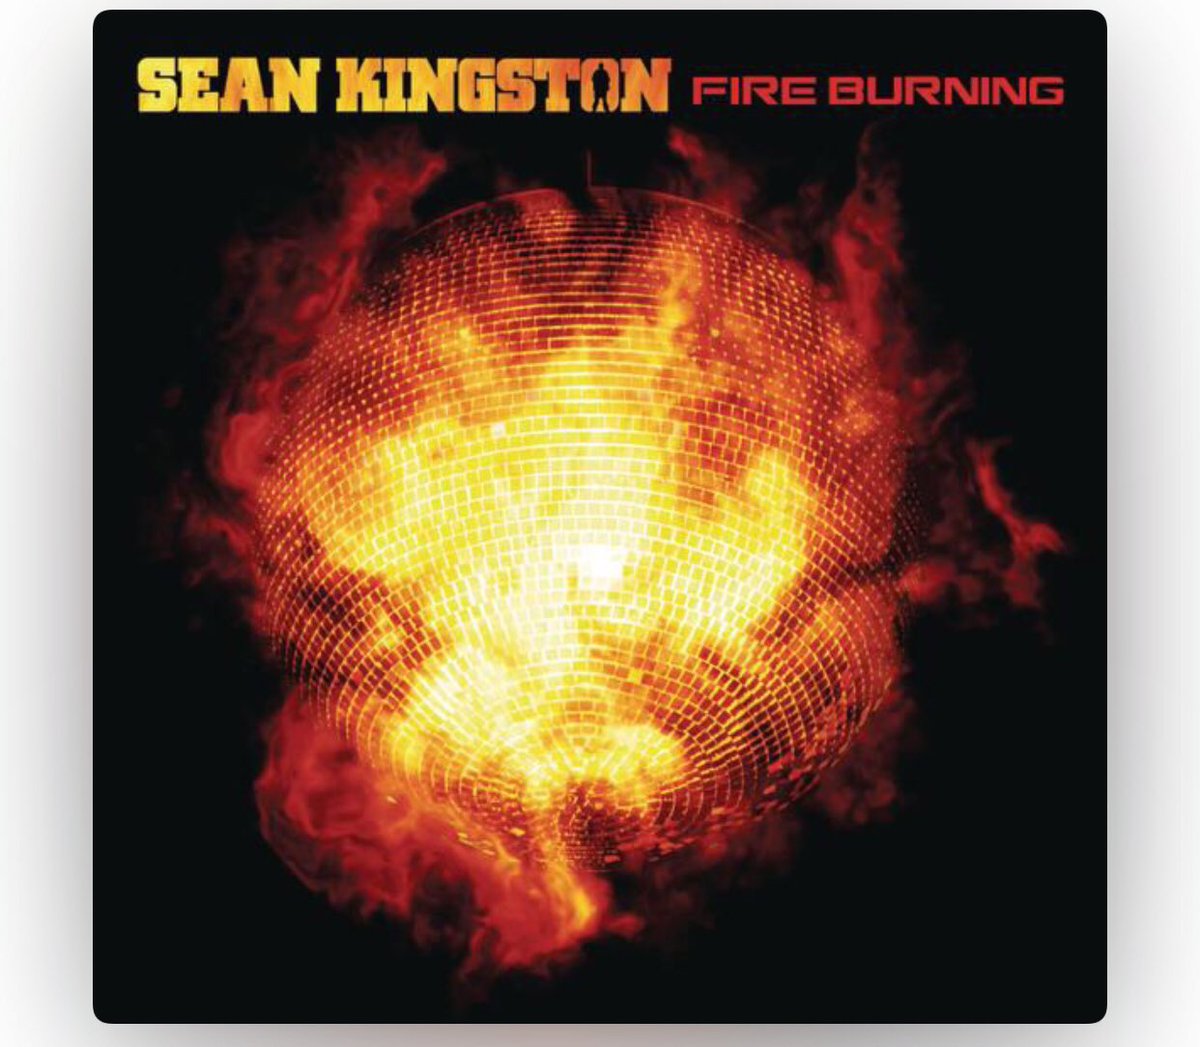 36. Sean Kingston - Fire burning